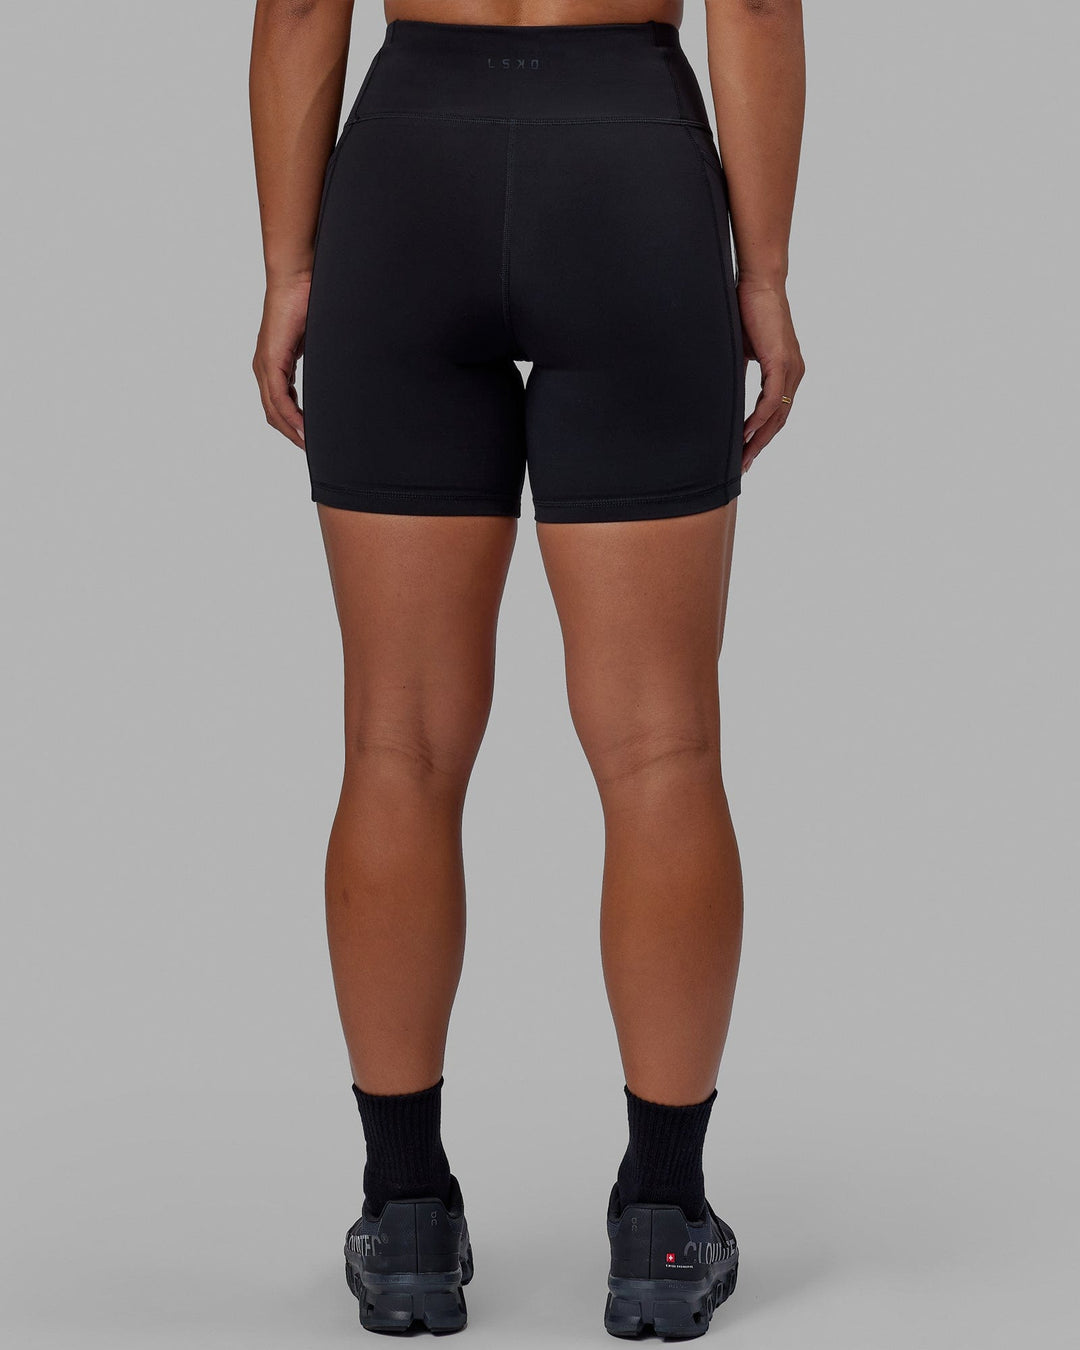 Rep Mid-Length Shorts - Black-White